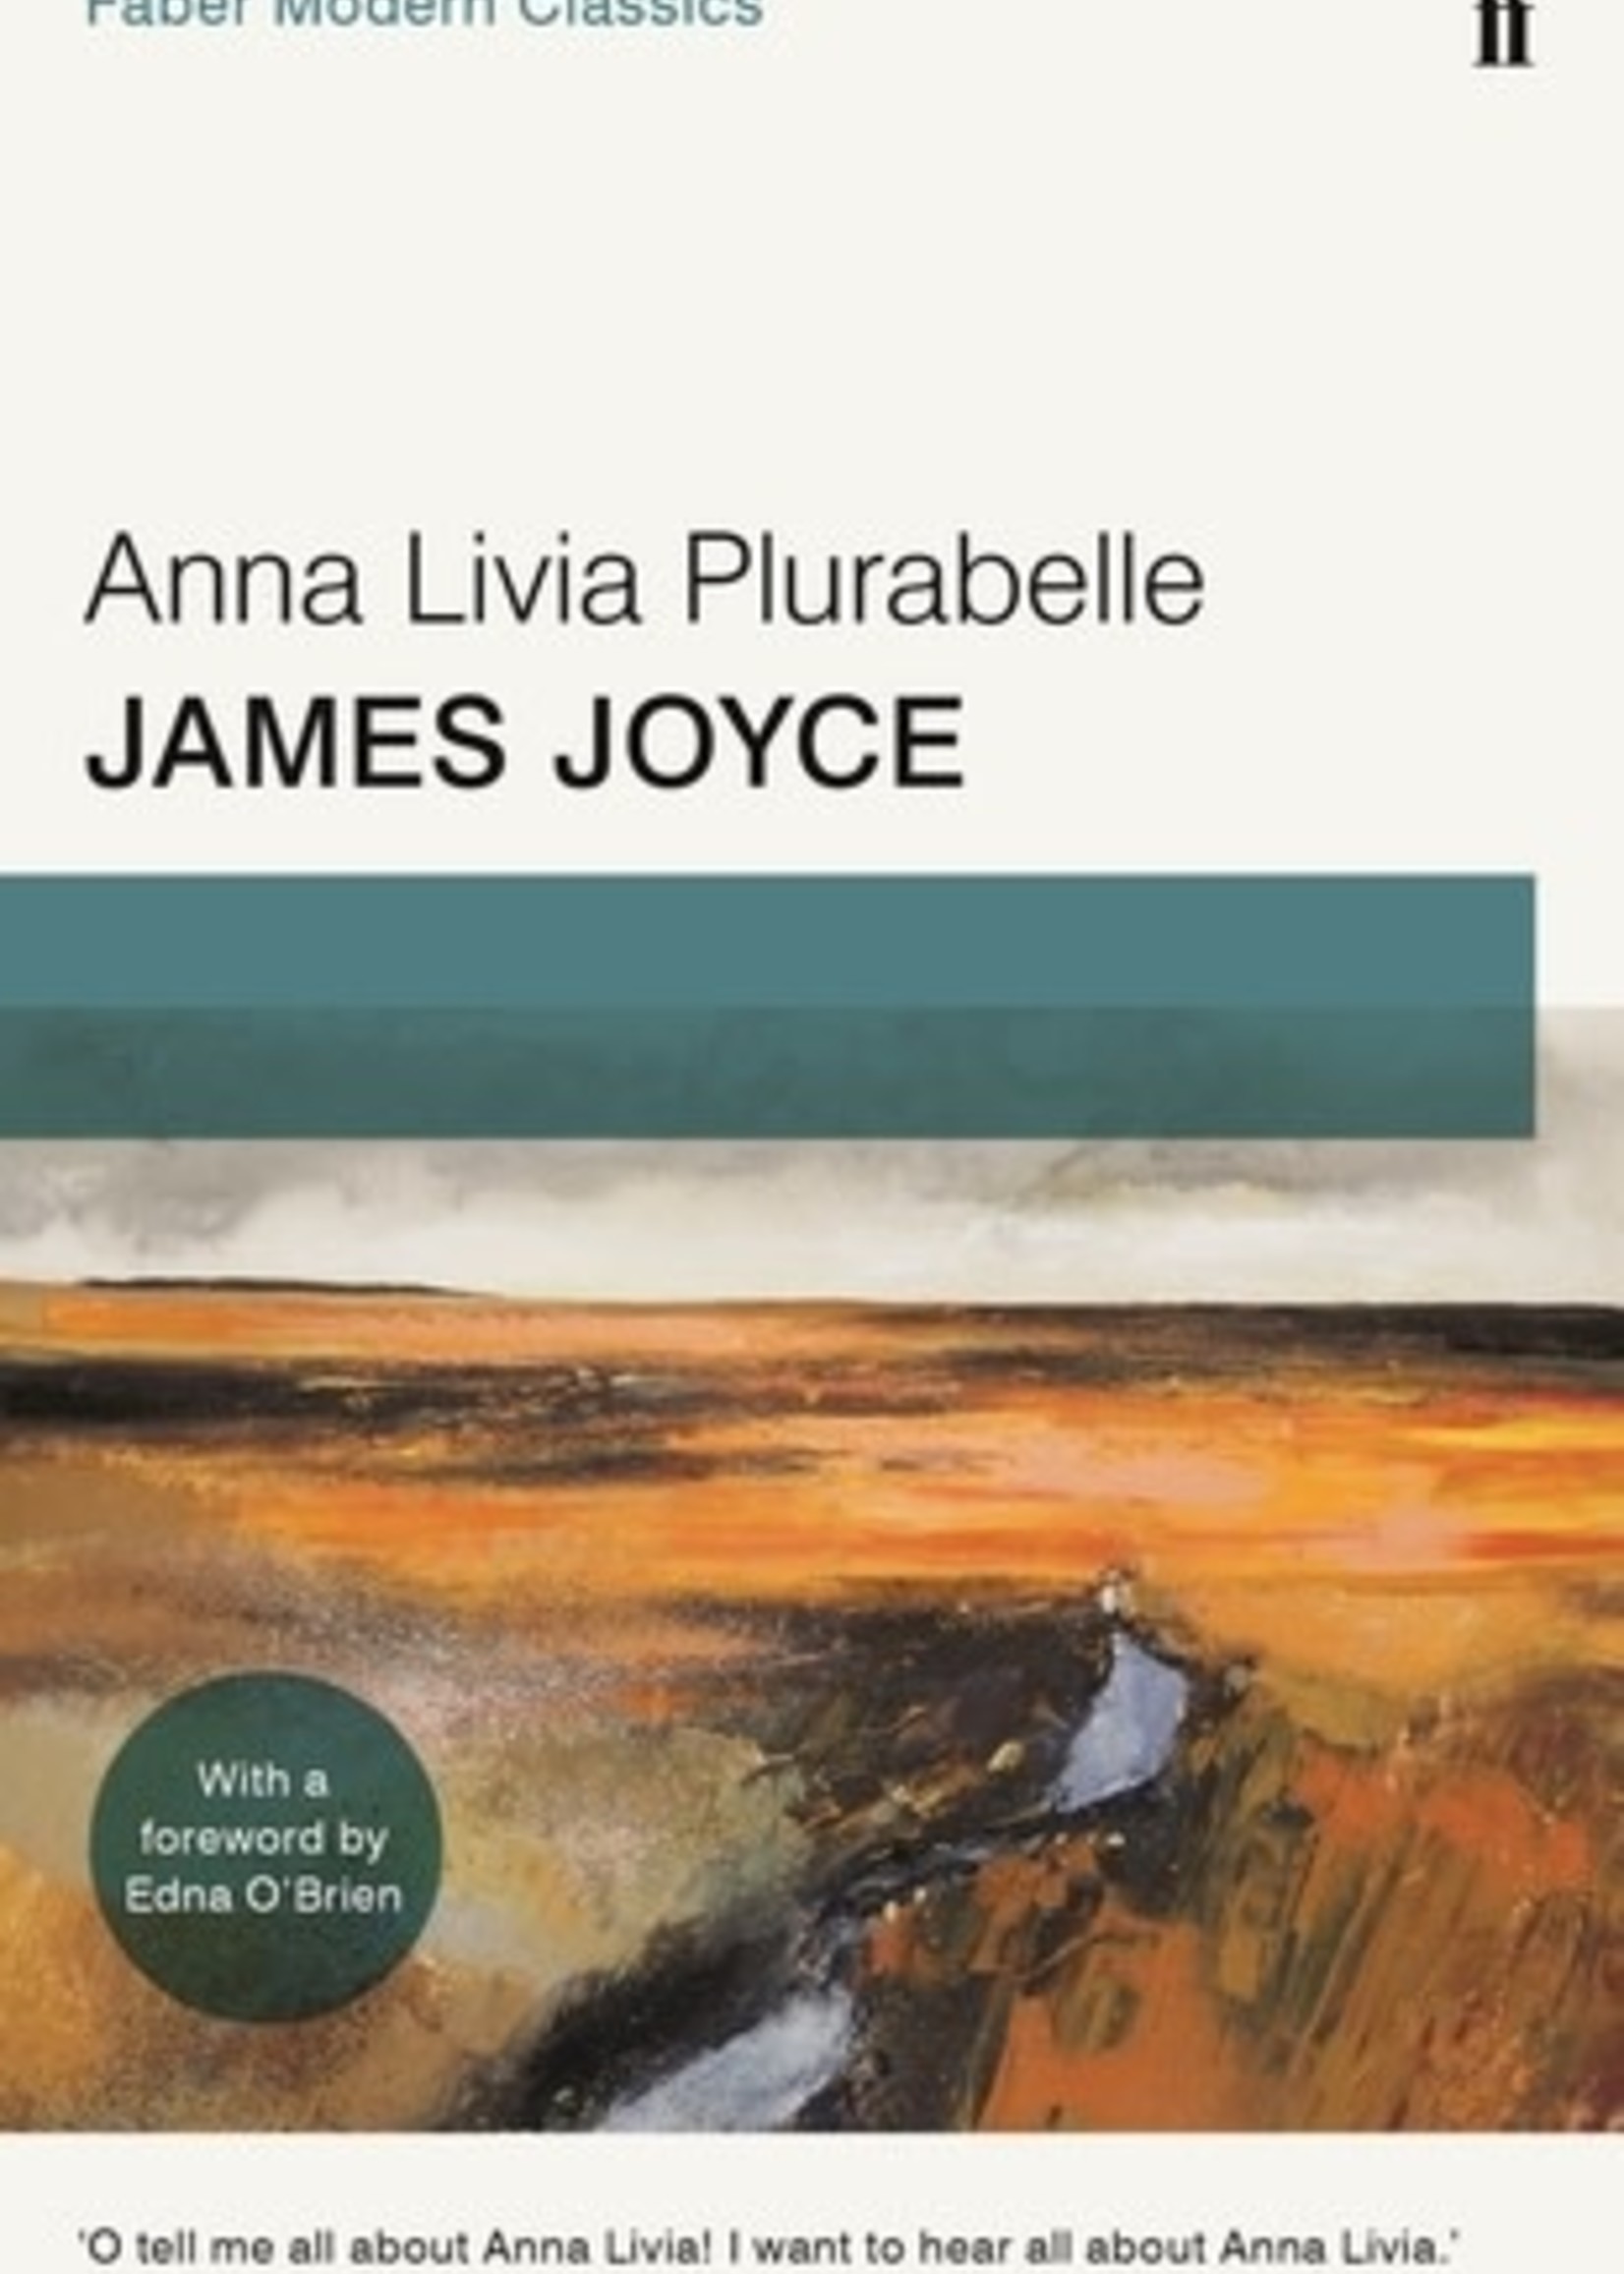 Anna Livia Plurabelle by James Joyce